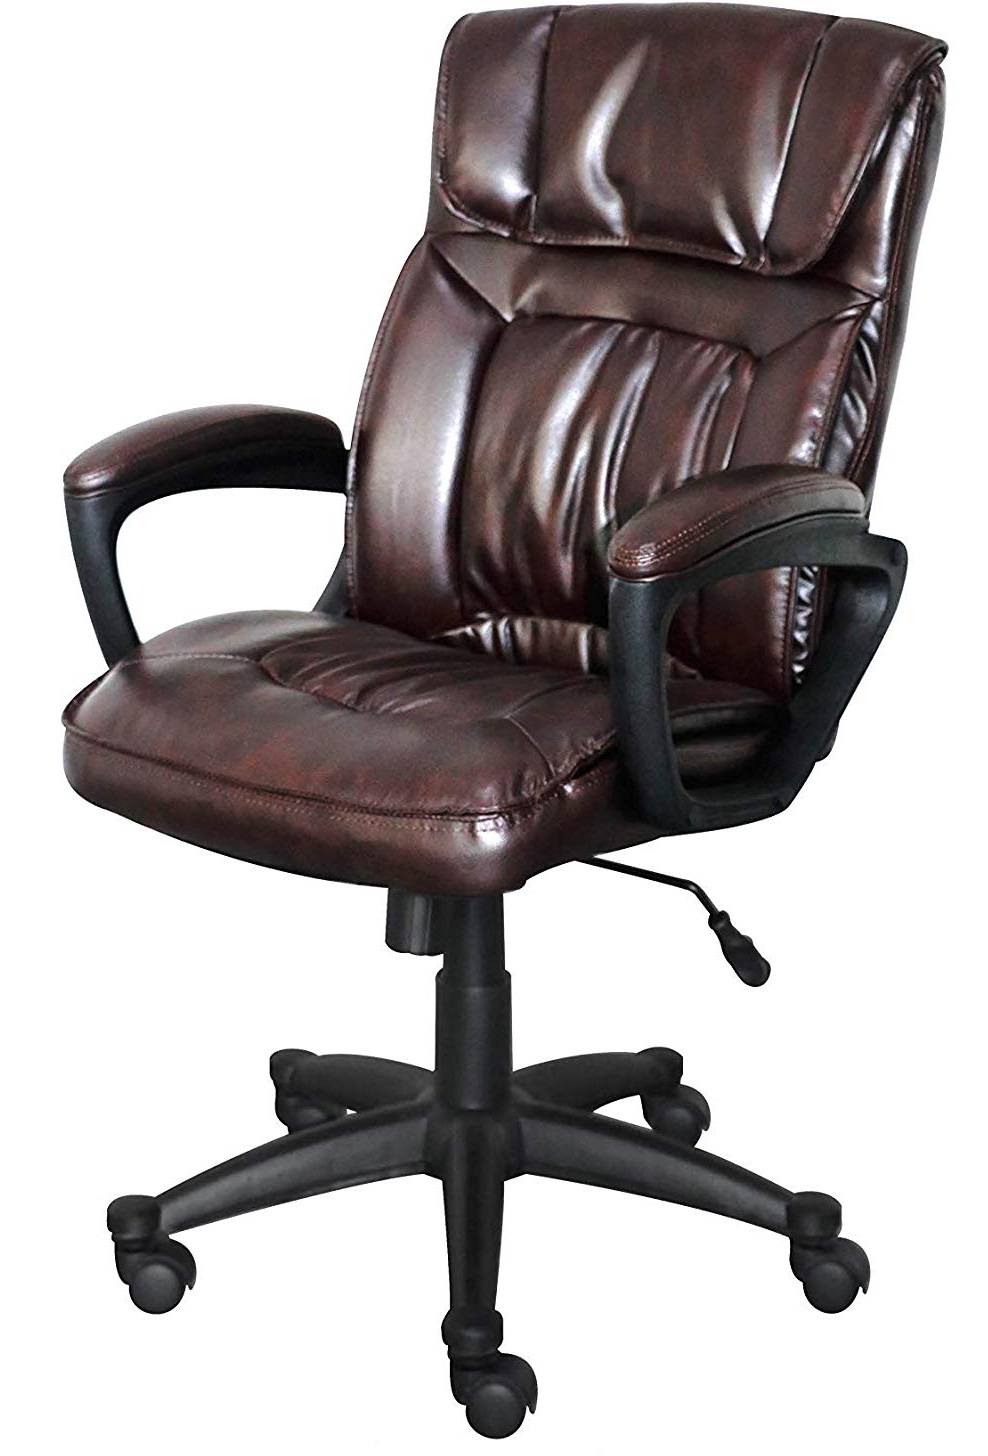 Serta Reclining Office Chair Style Hannah Recliner